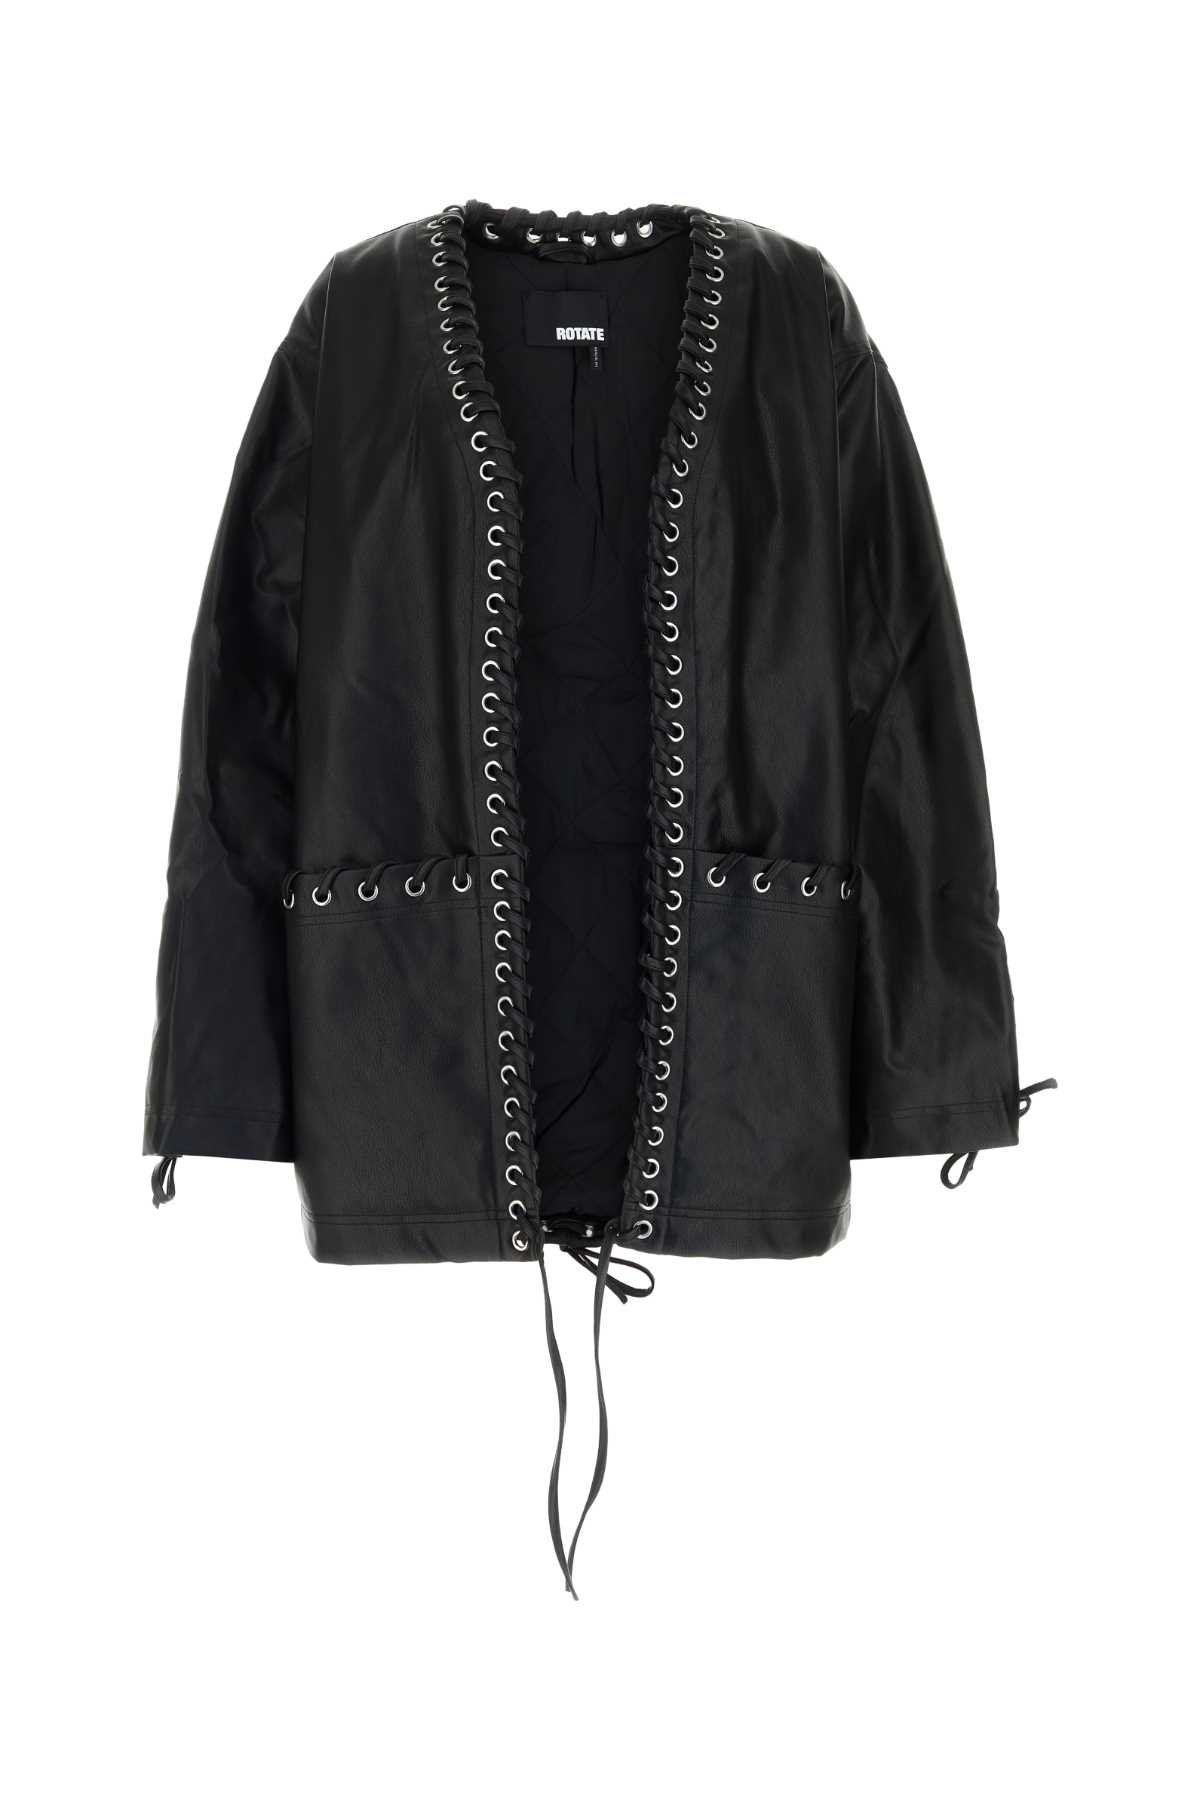 Black Synthetic Leather Jacket